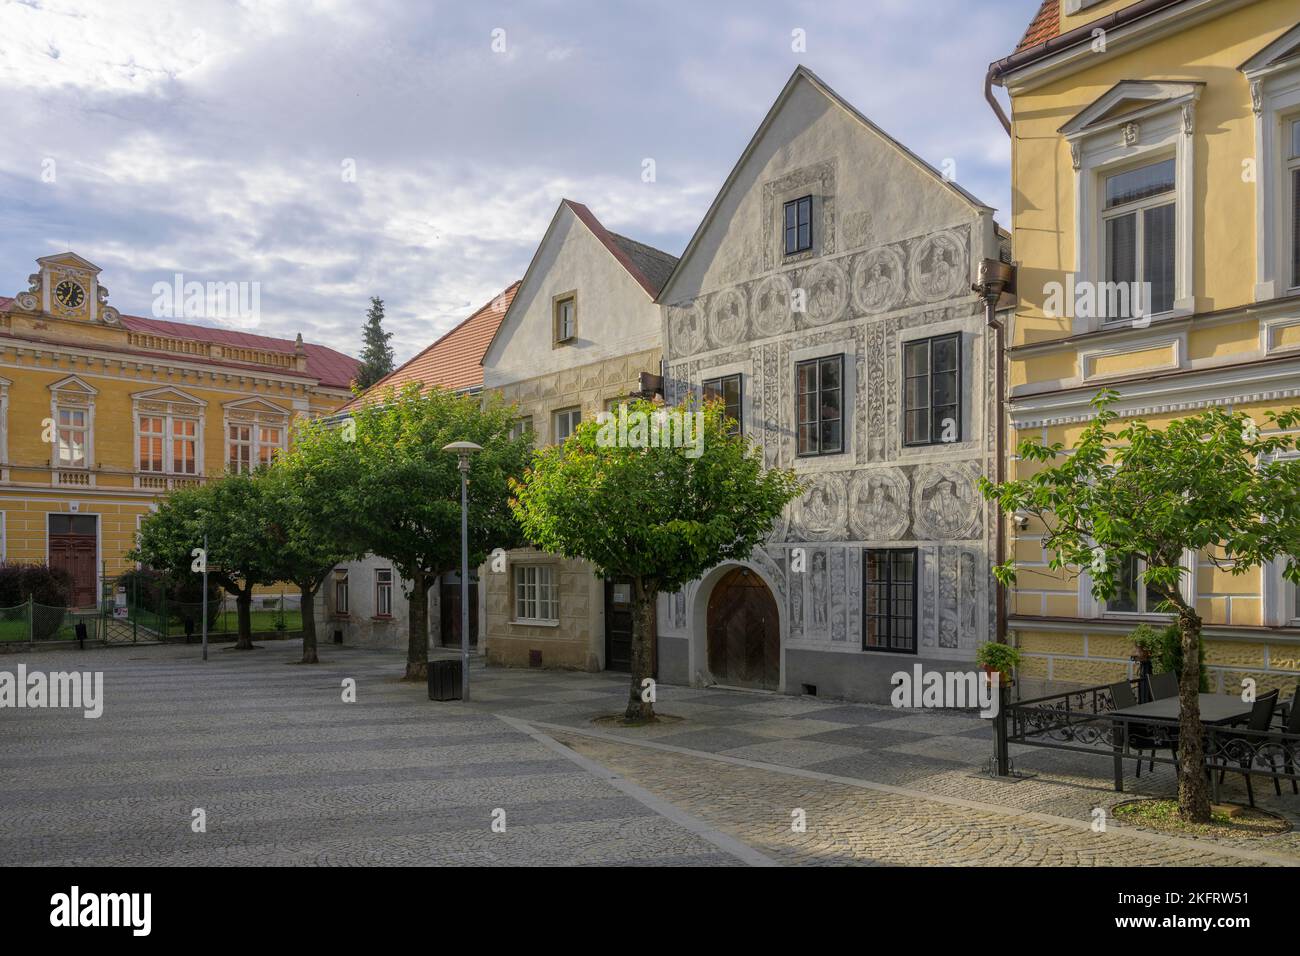 Historical Old Town with Sgraffito House, Slavonice, Jiho?eský kraj, Czech Republic, Europe Stock Photo